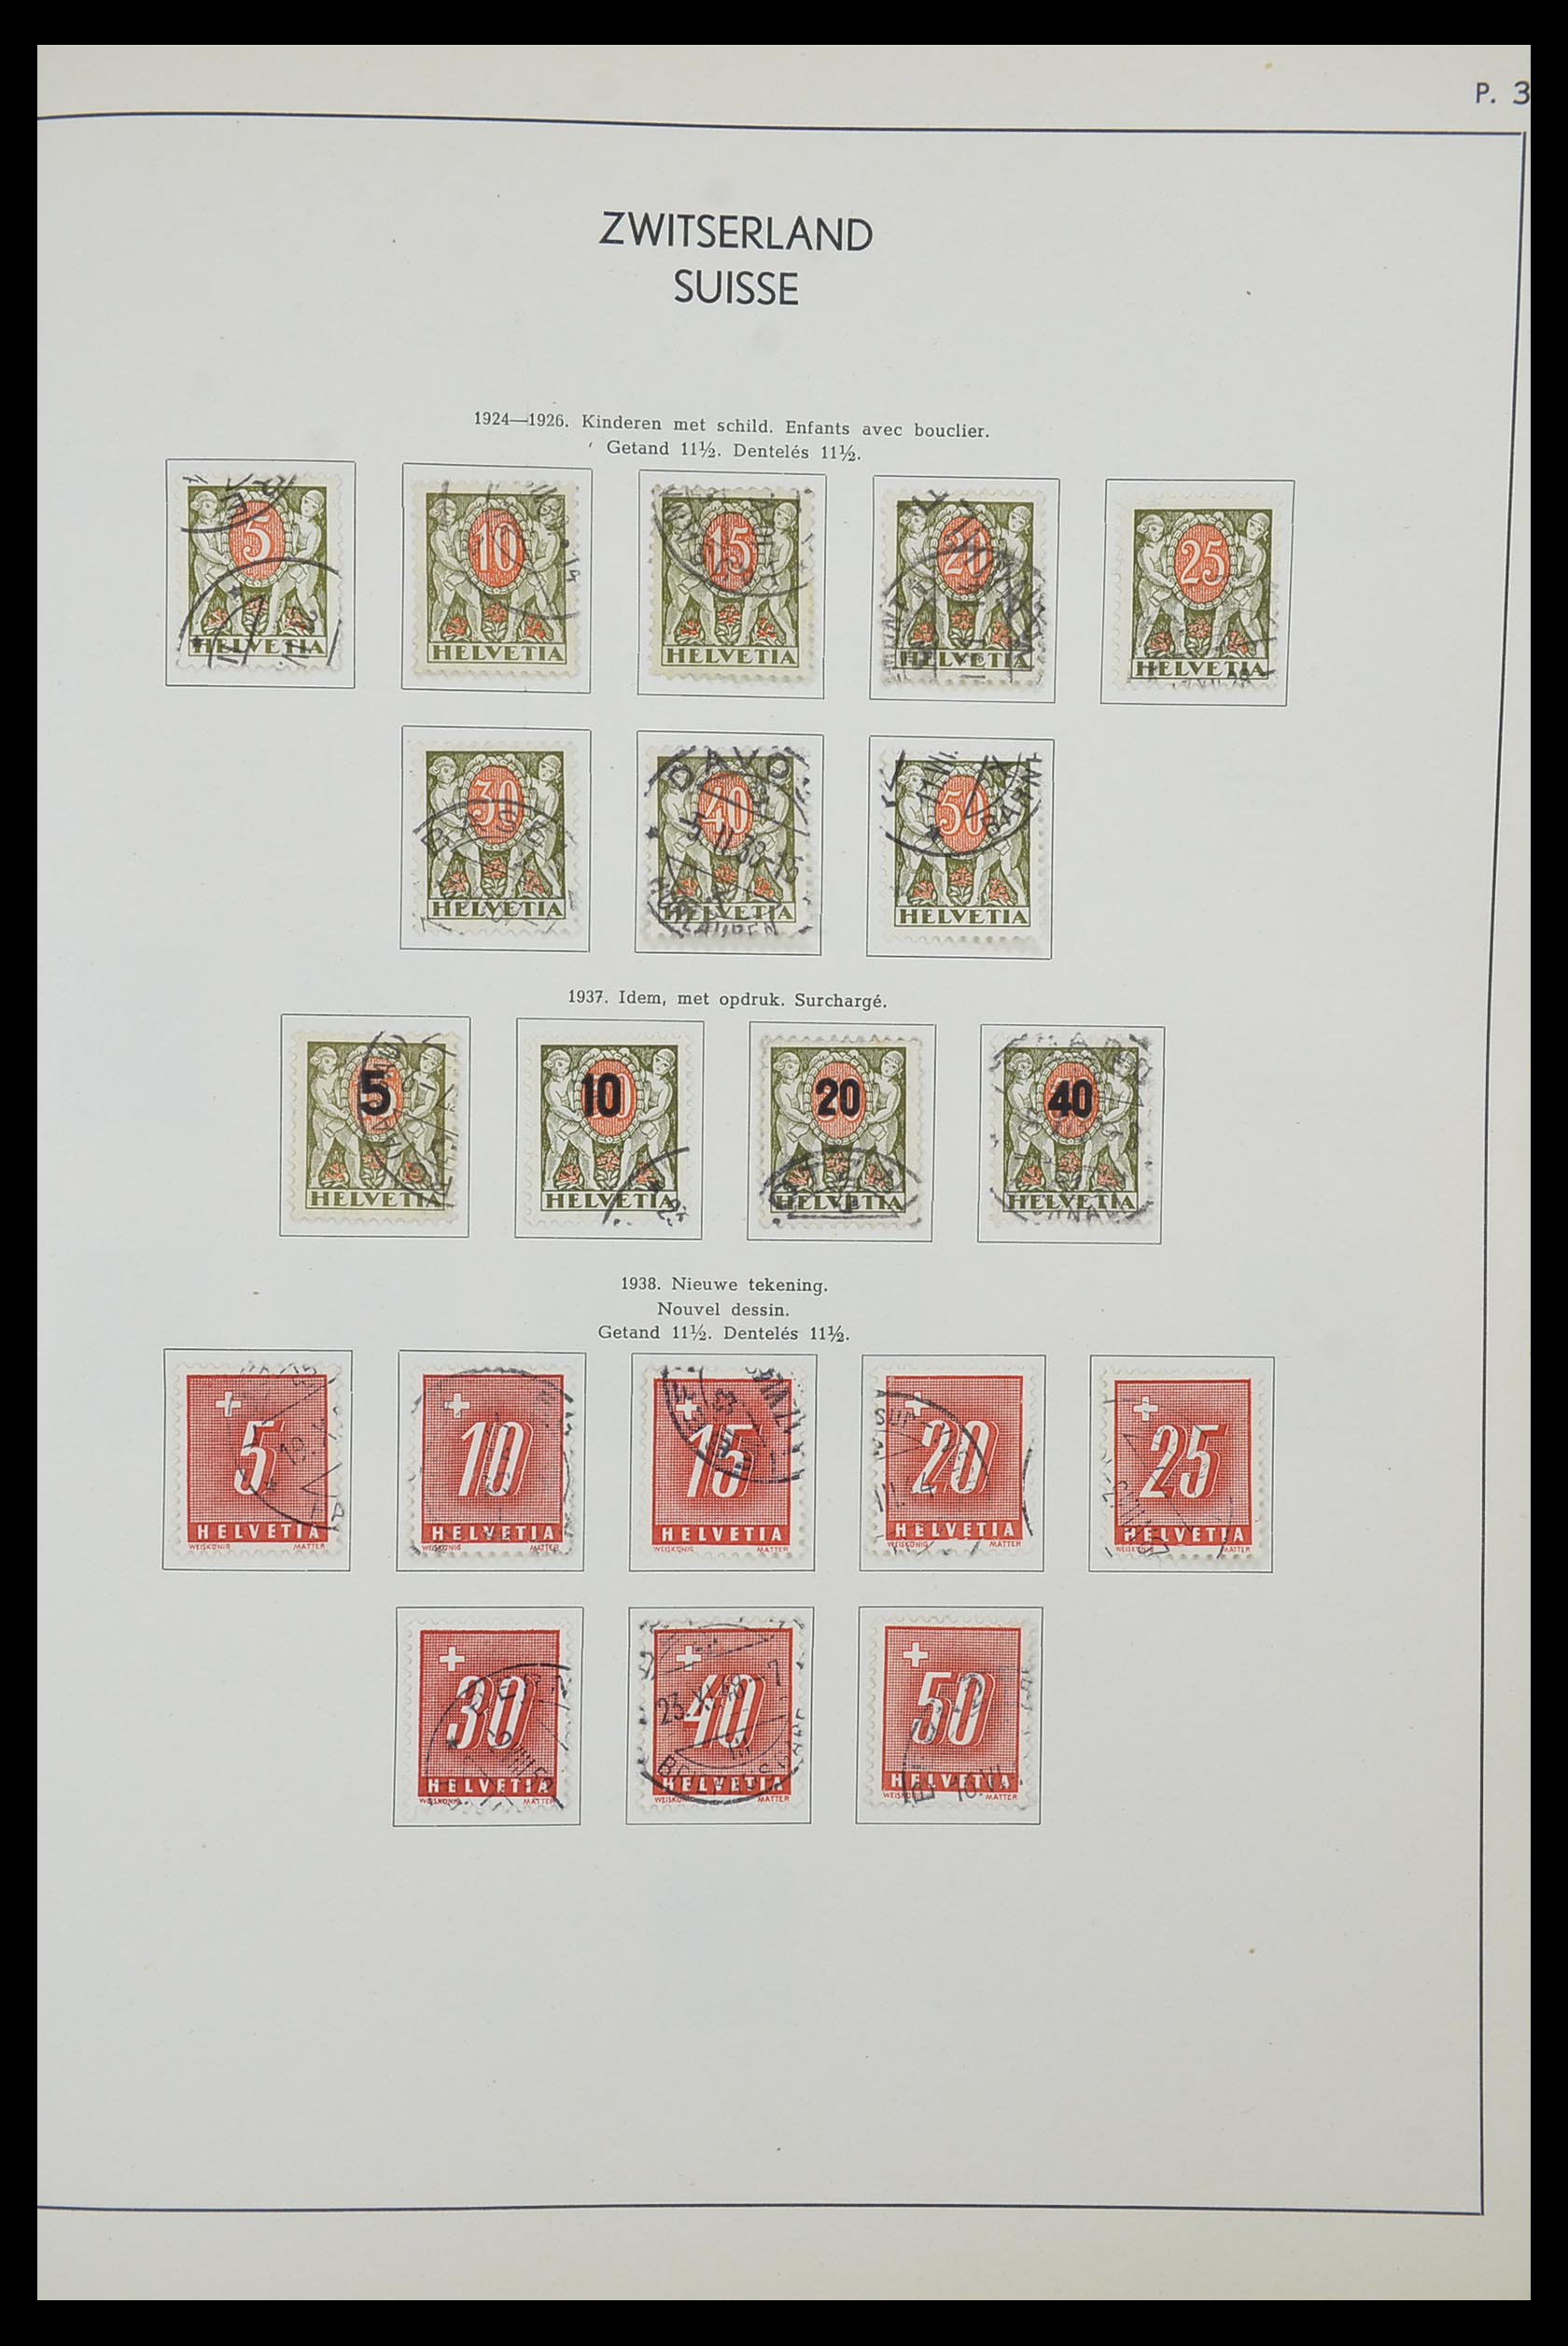 33601 105 - Stamp collection 33601 Switzerland 1854-1985.